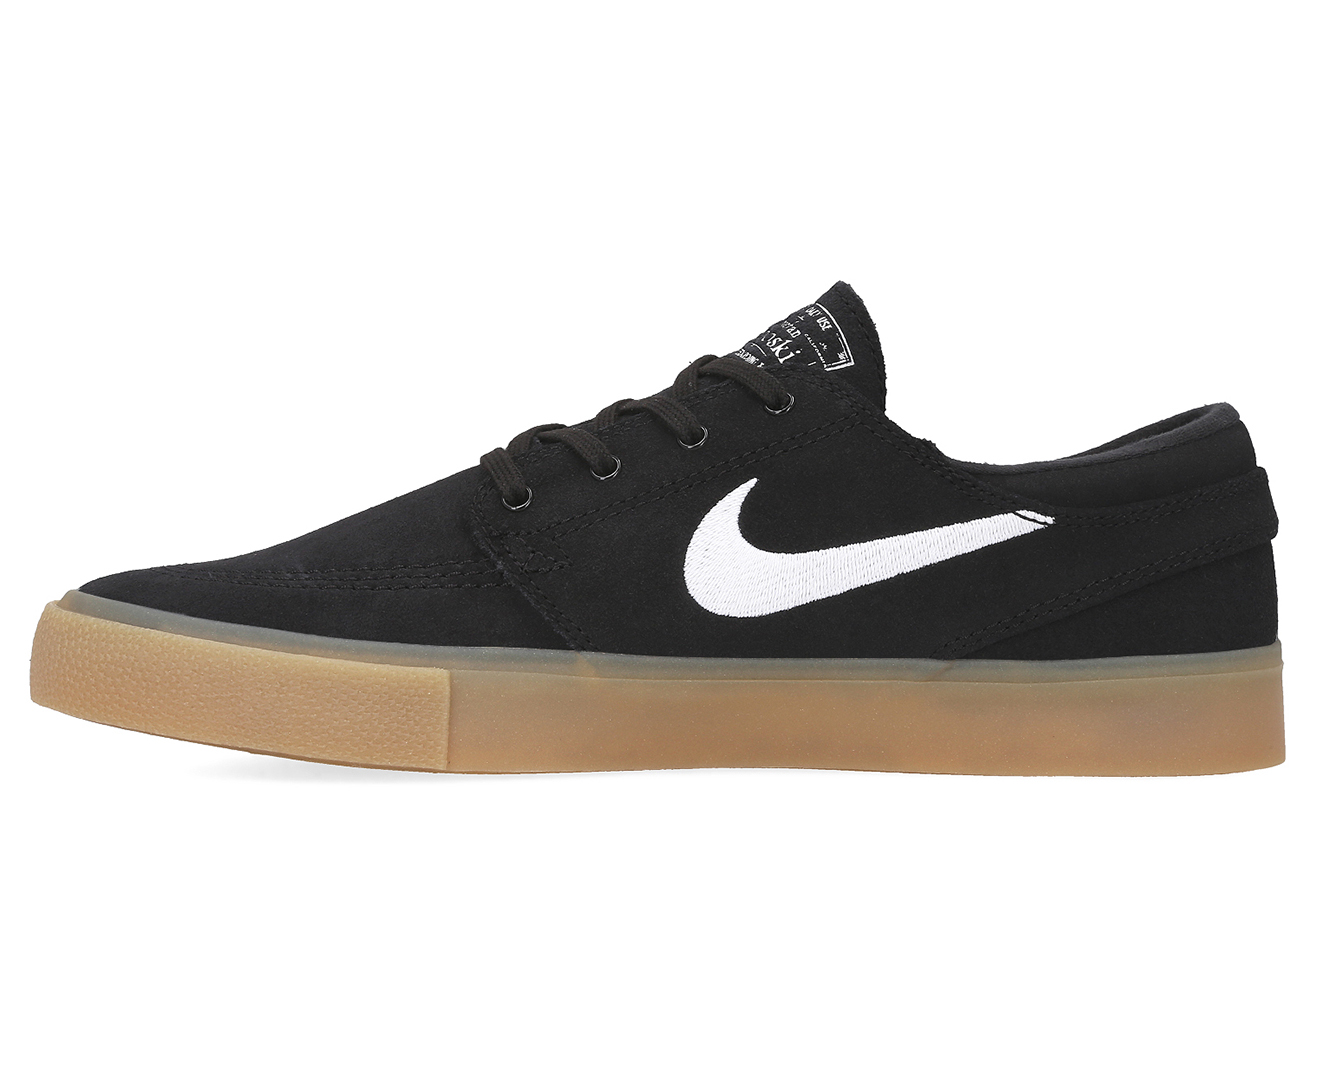 Nike Men's Zoom Janoski RM Skate Shoes - Black/White/Gum |